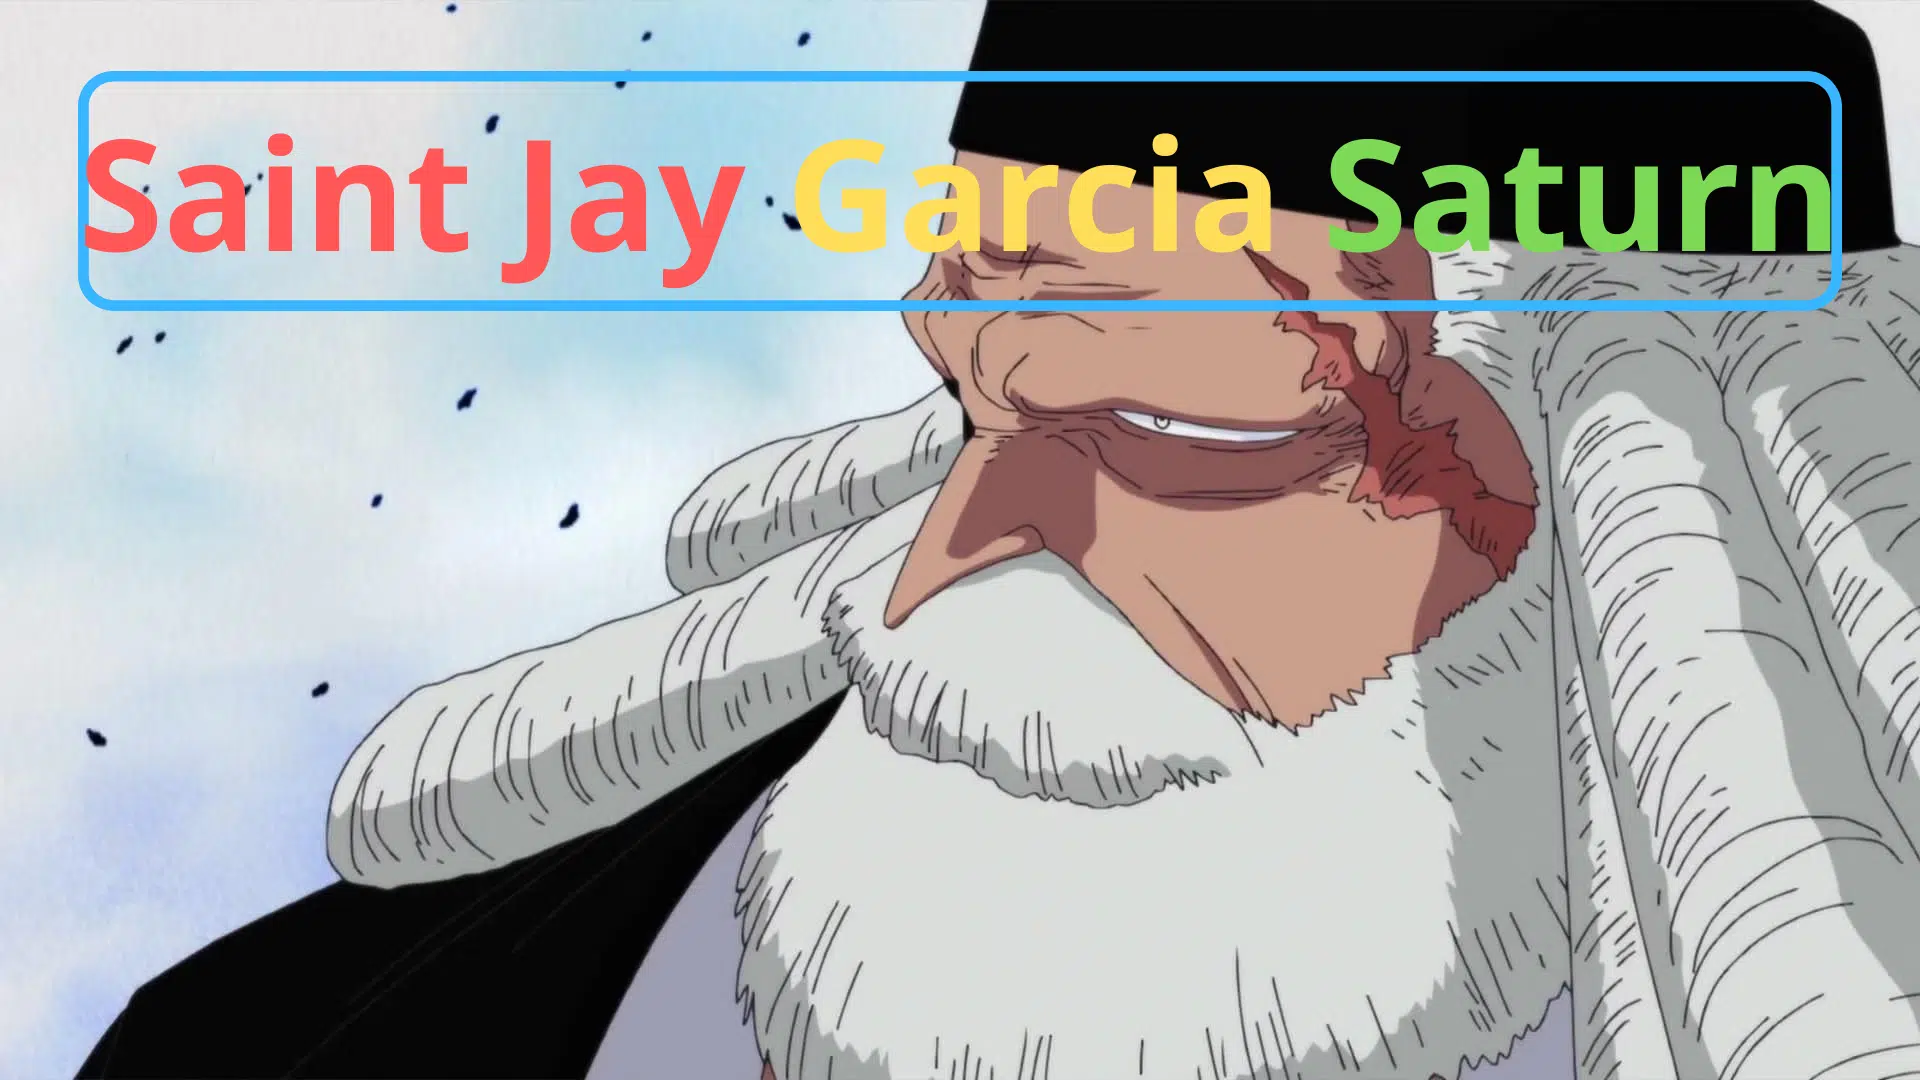 Saint Jay Garcia Saturn